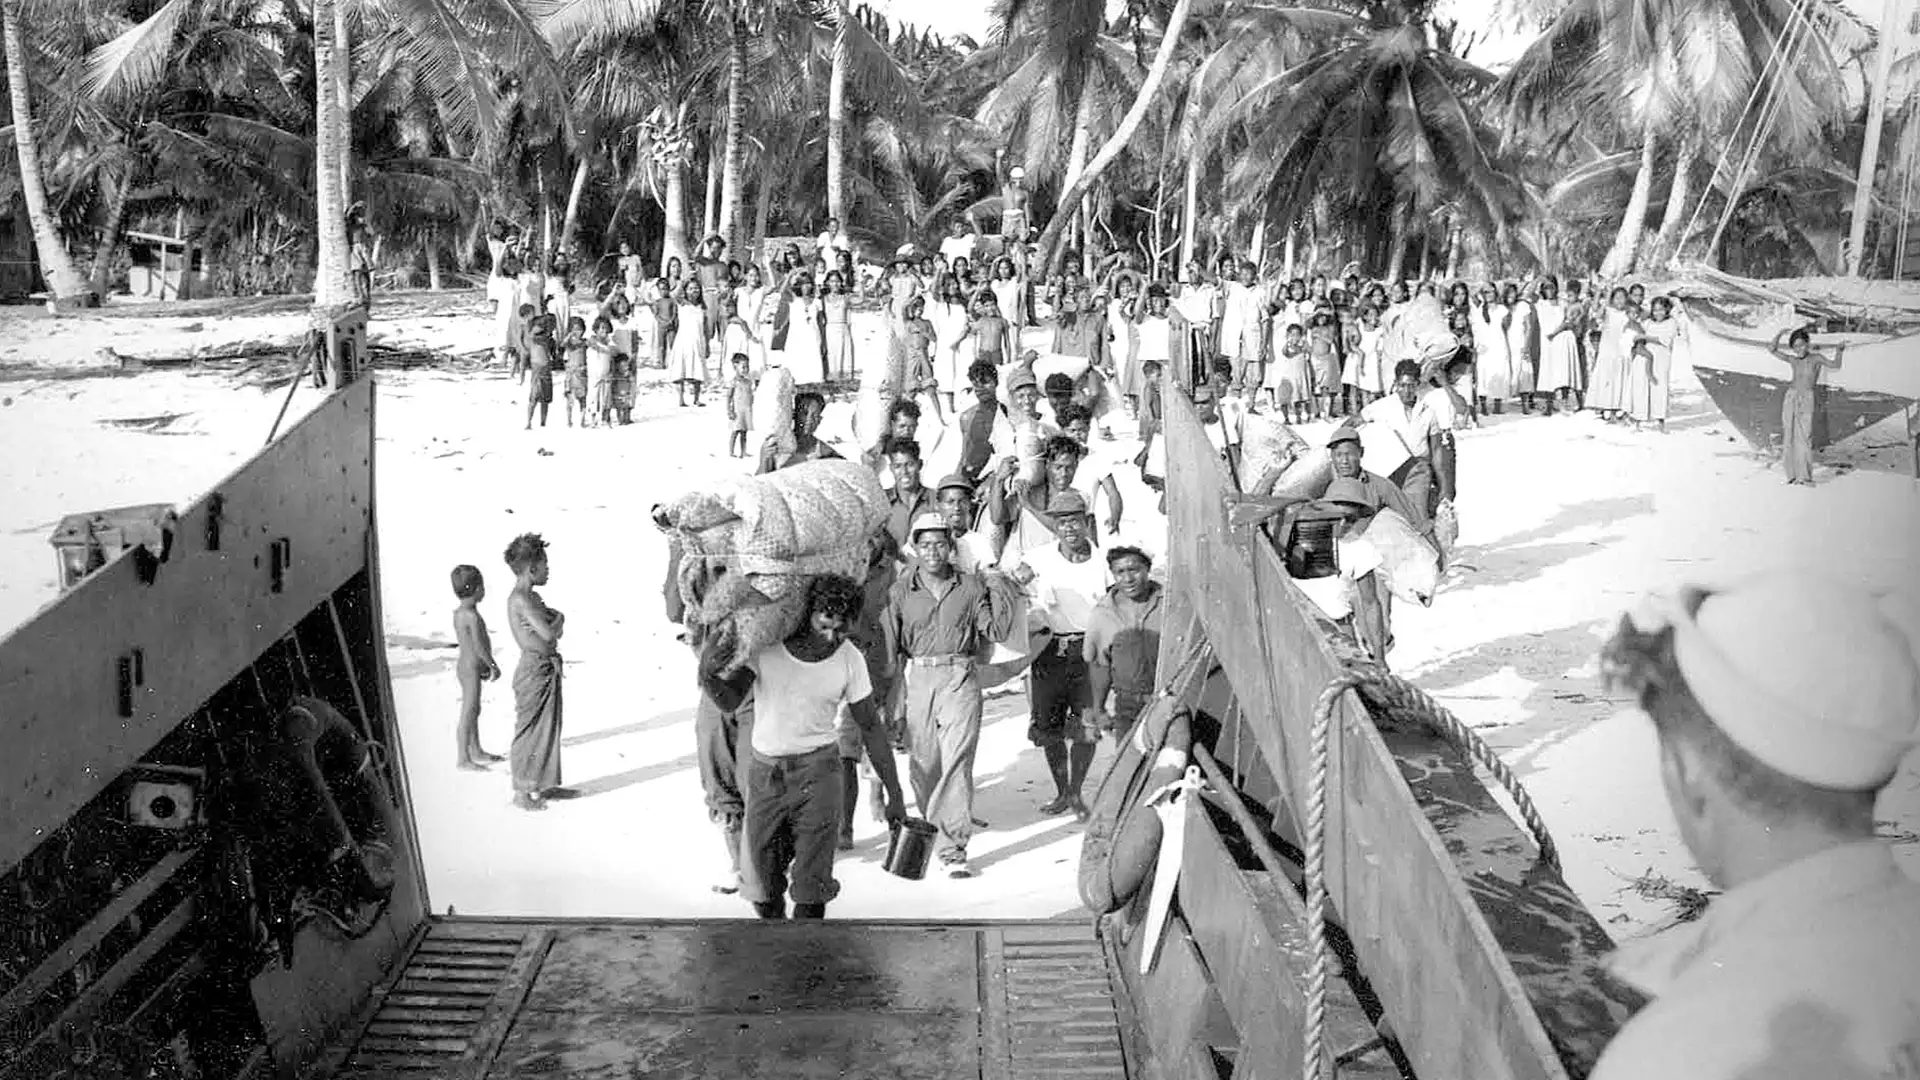 Bikini Islanders board a landing craft, vehicle, personnel (LCVP) as they depart from Bikini Atoll in March 1946